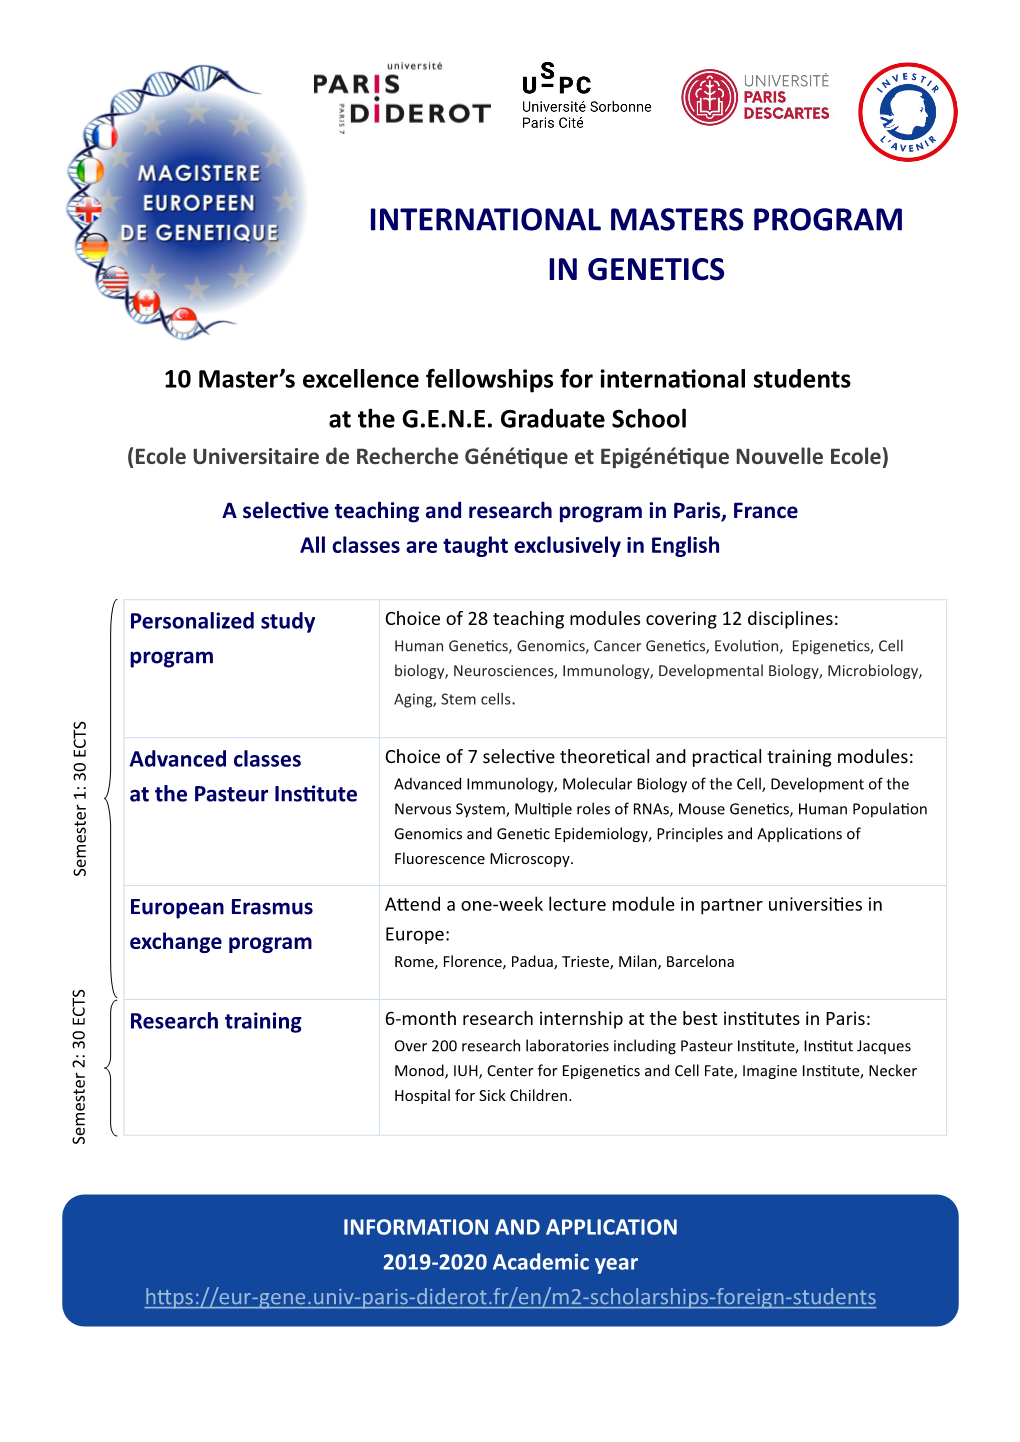 International Masters Program in Genetics